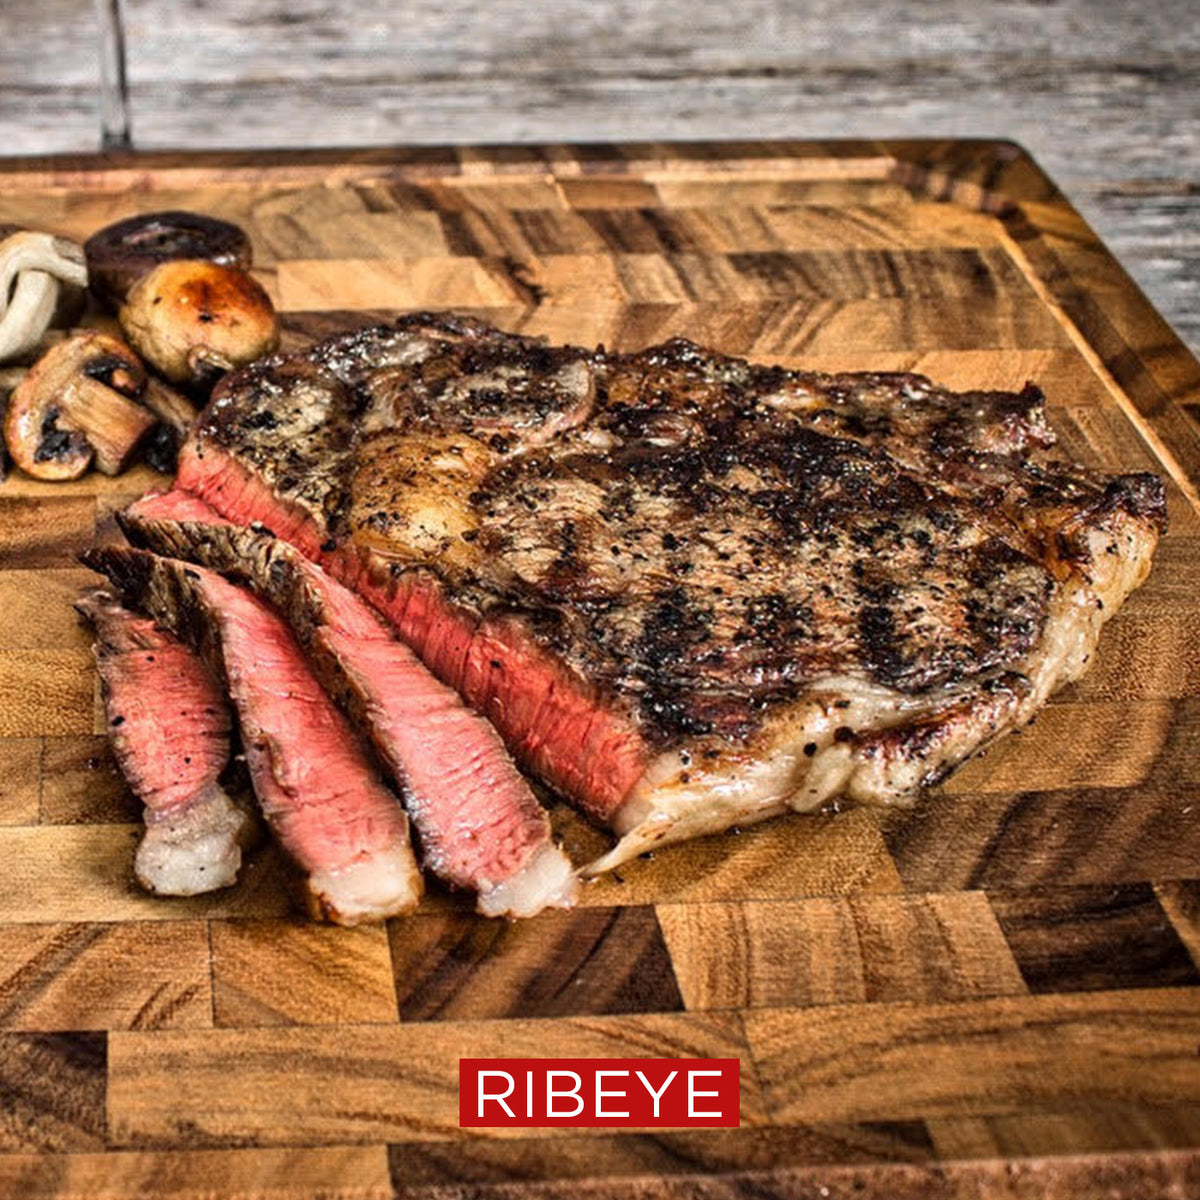 Premium 14oz Ribeye Bundle: The King of Steaks